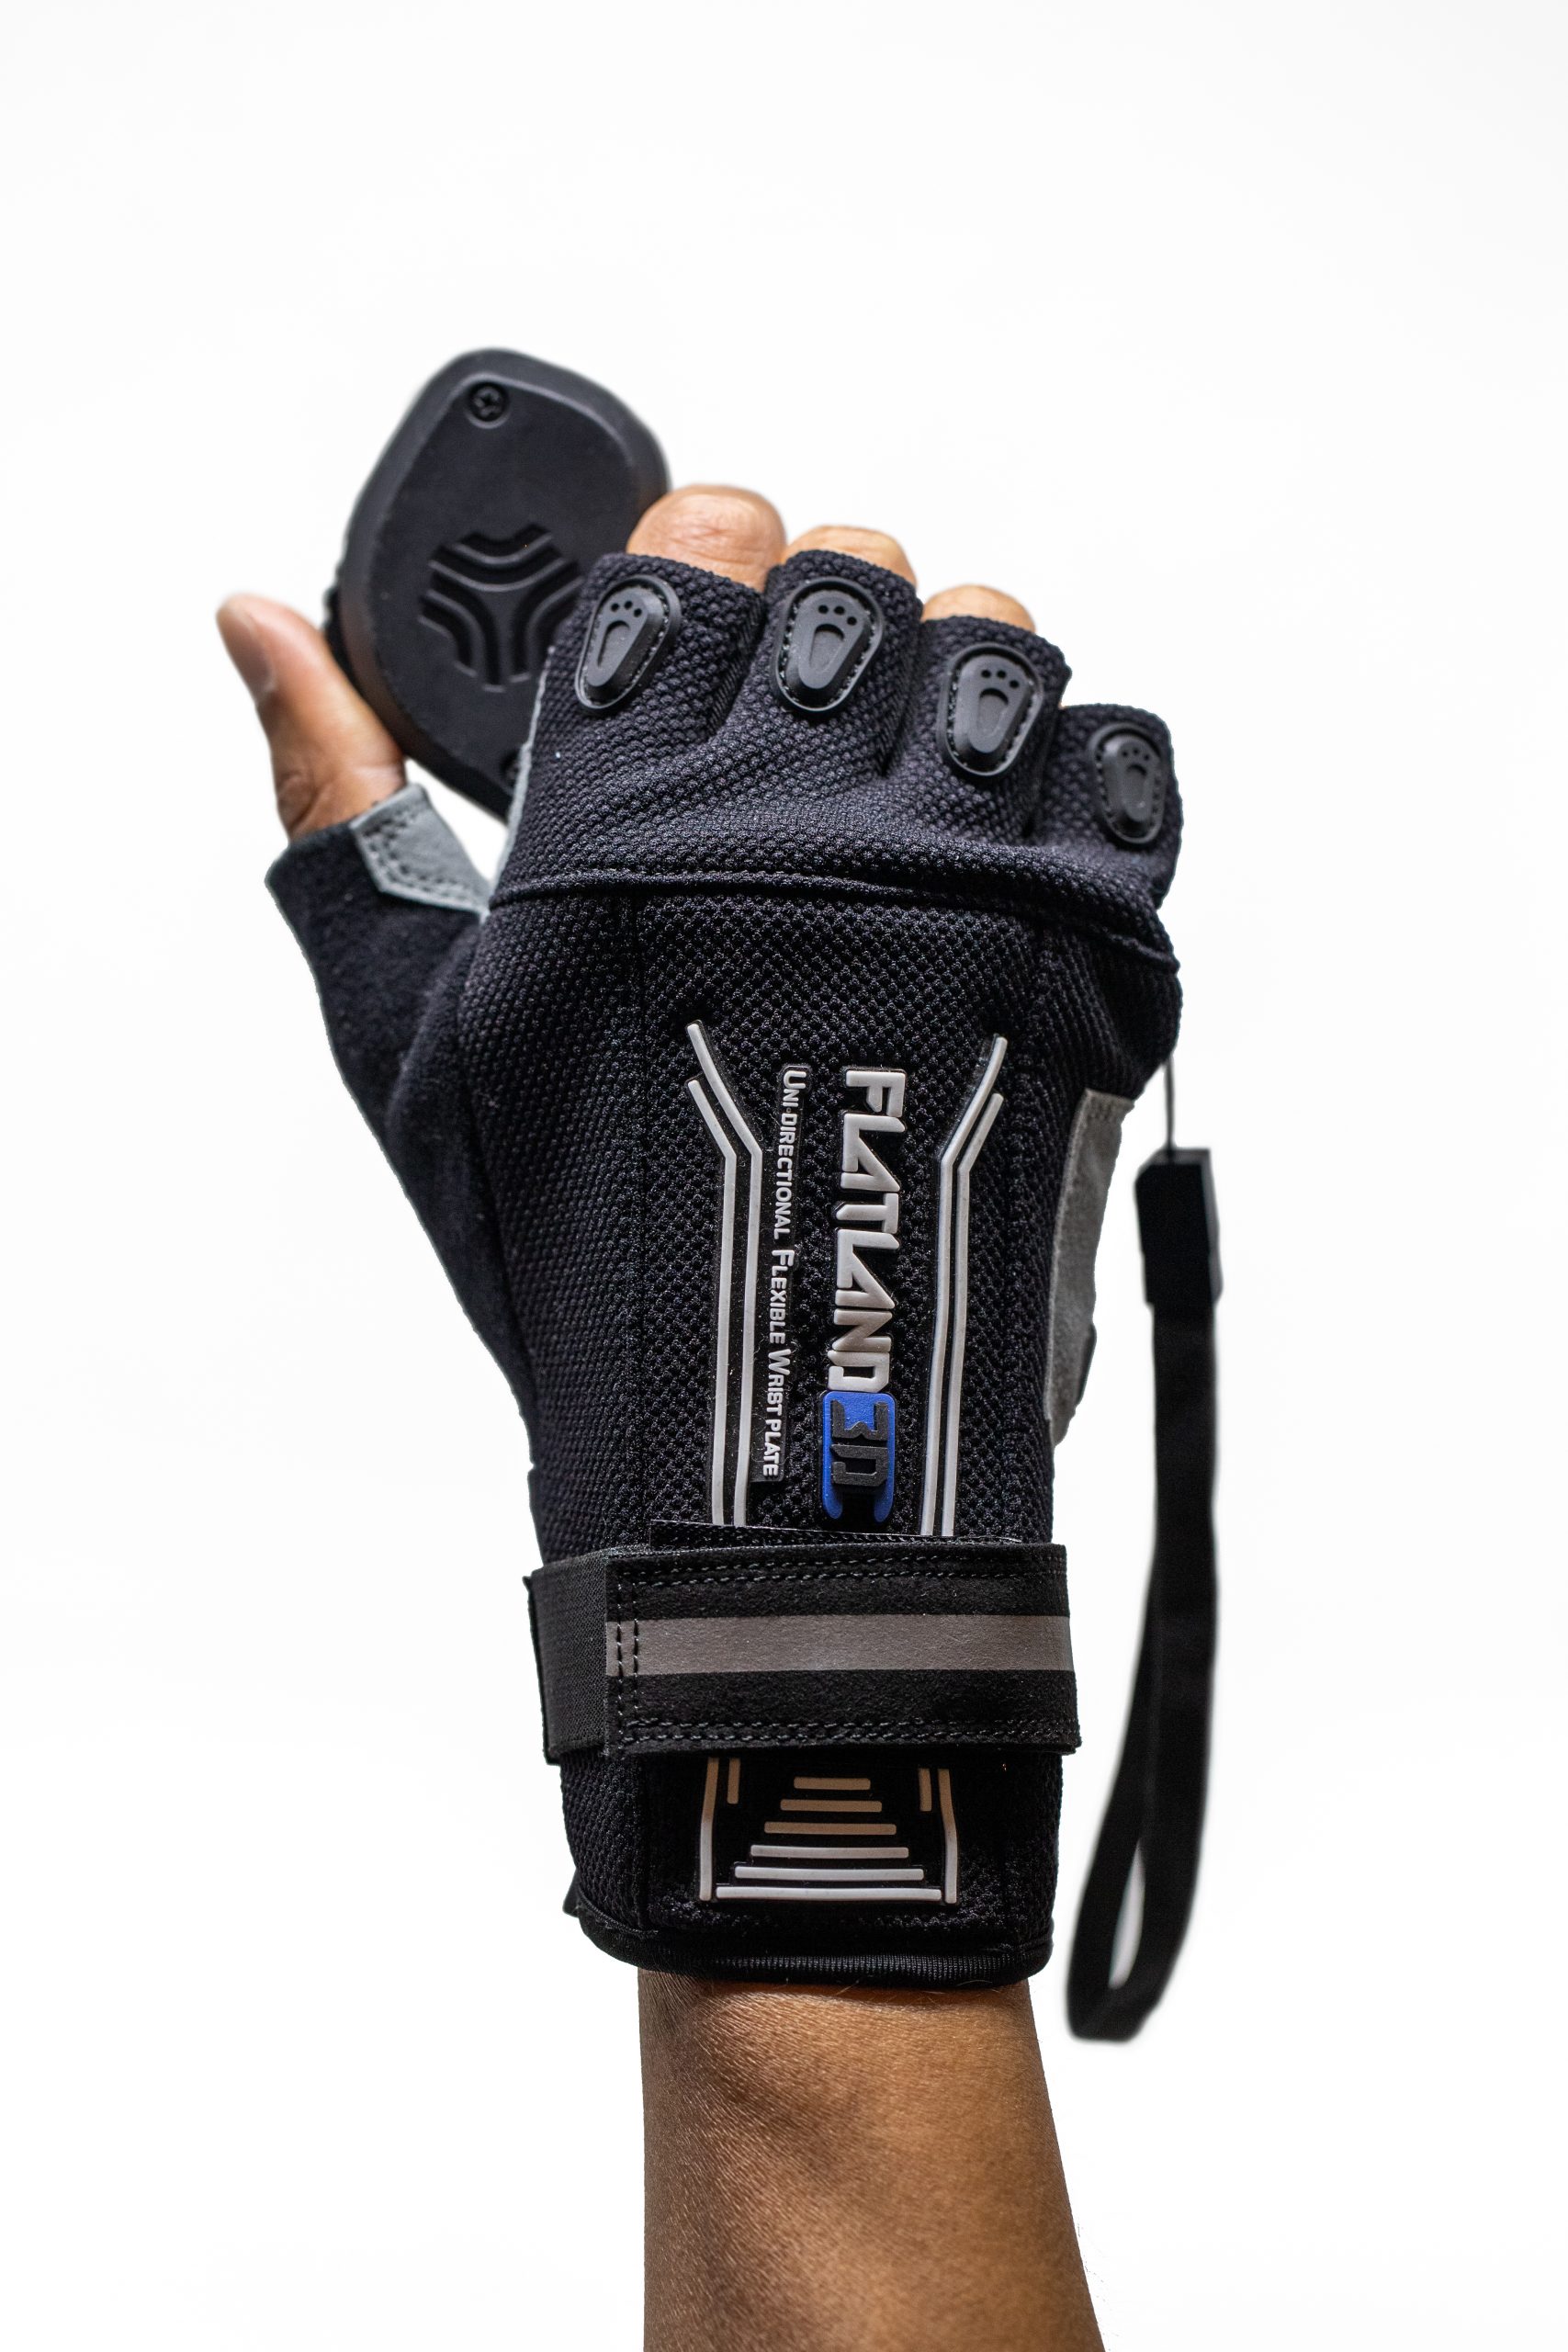 flatland3d E-Skate Glove Medium